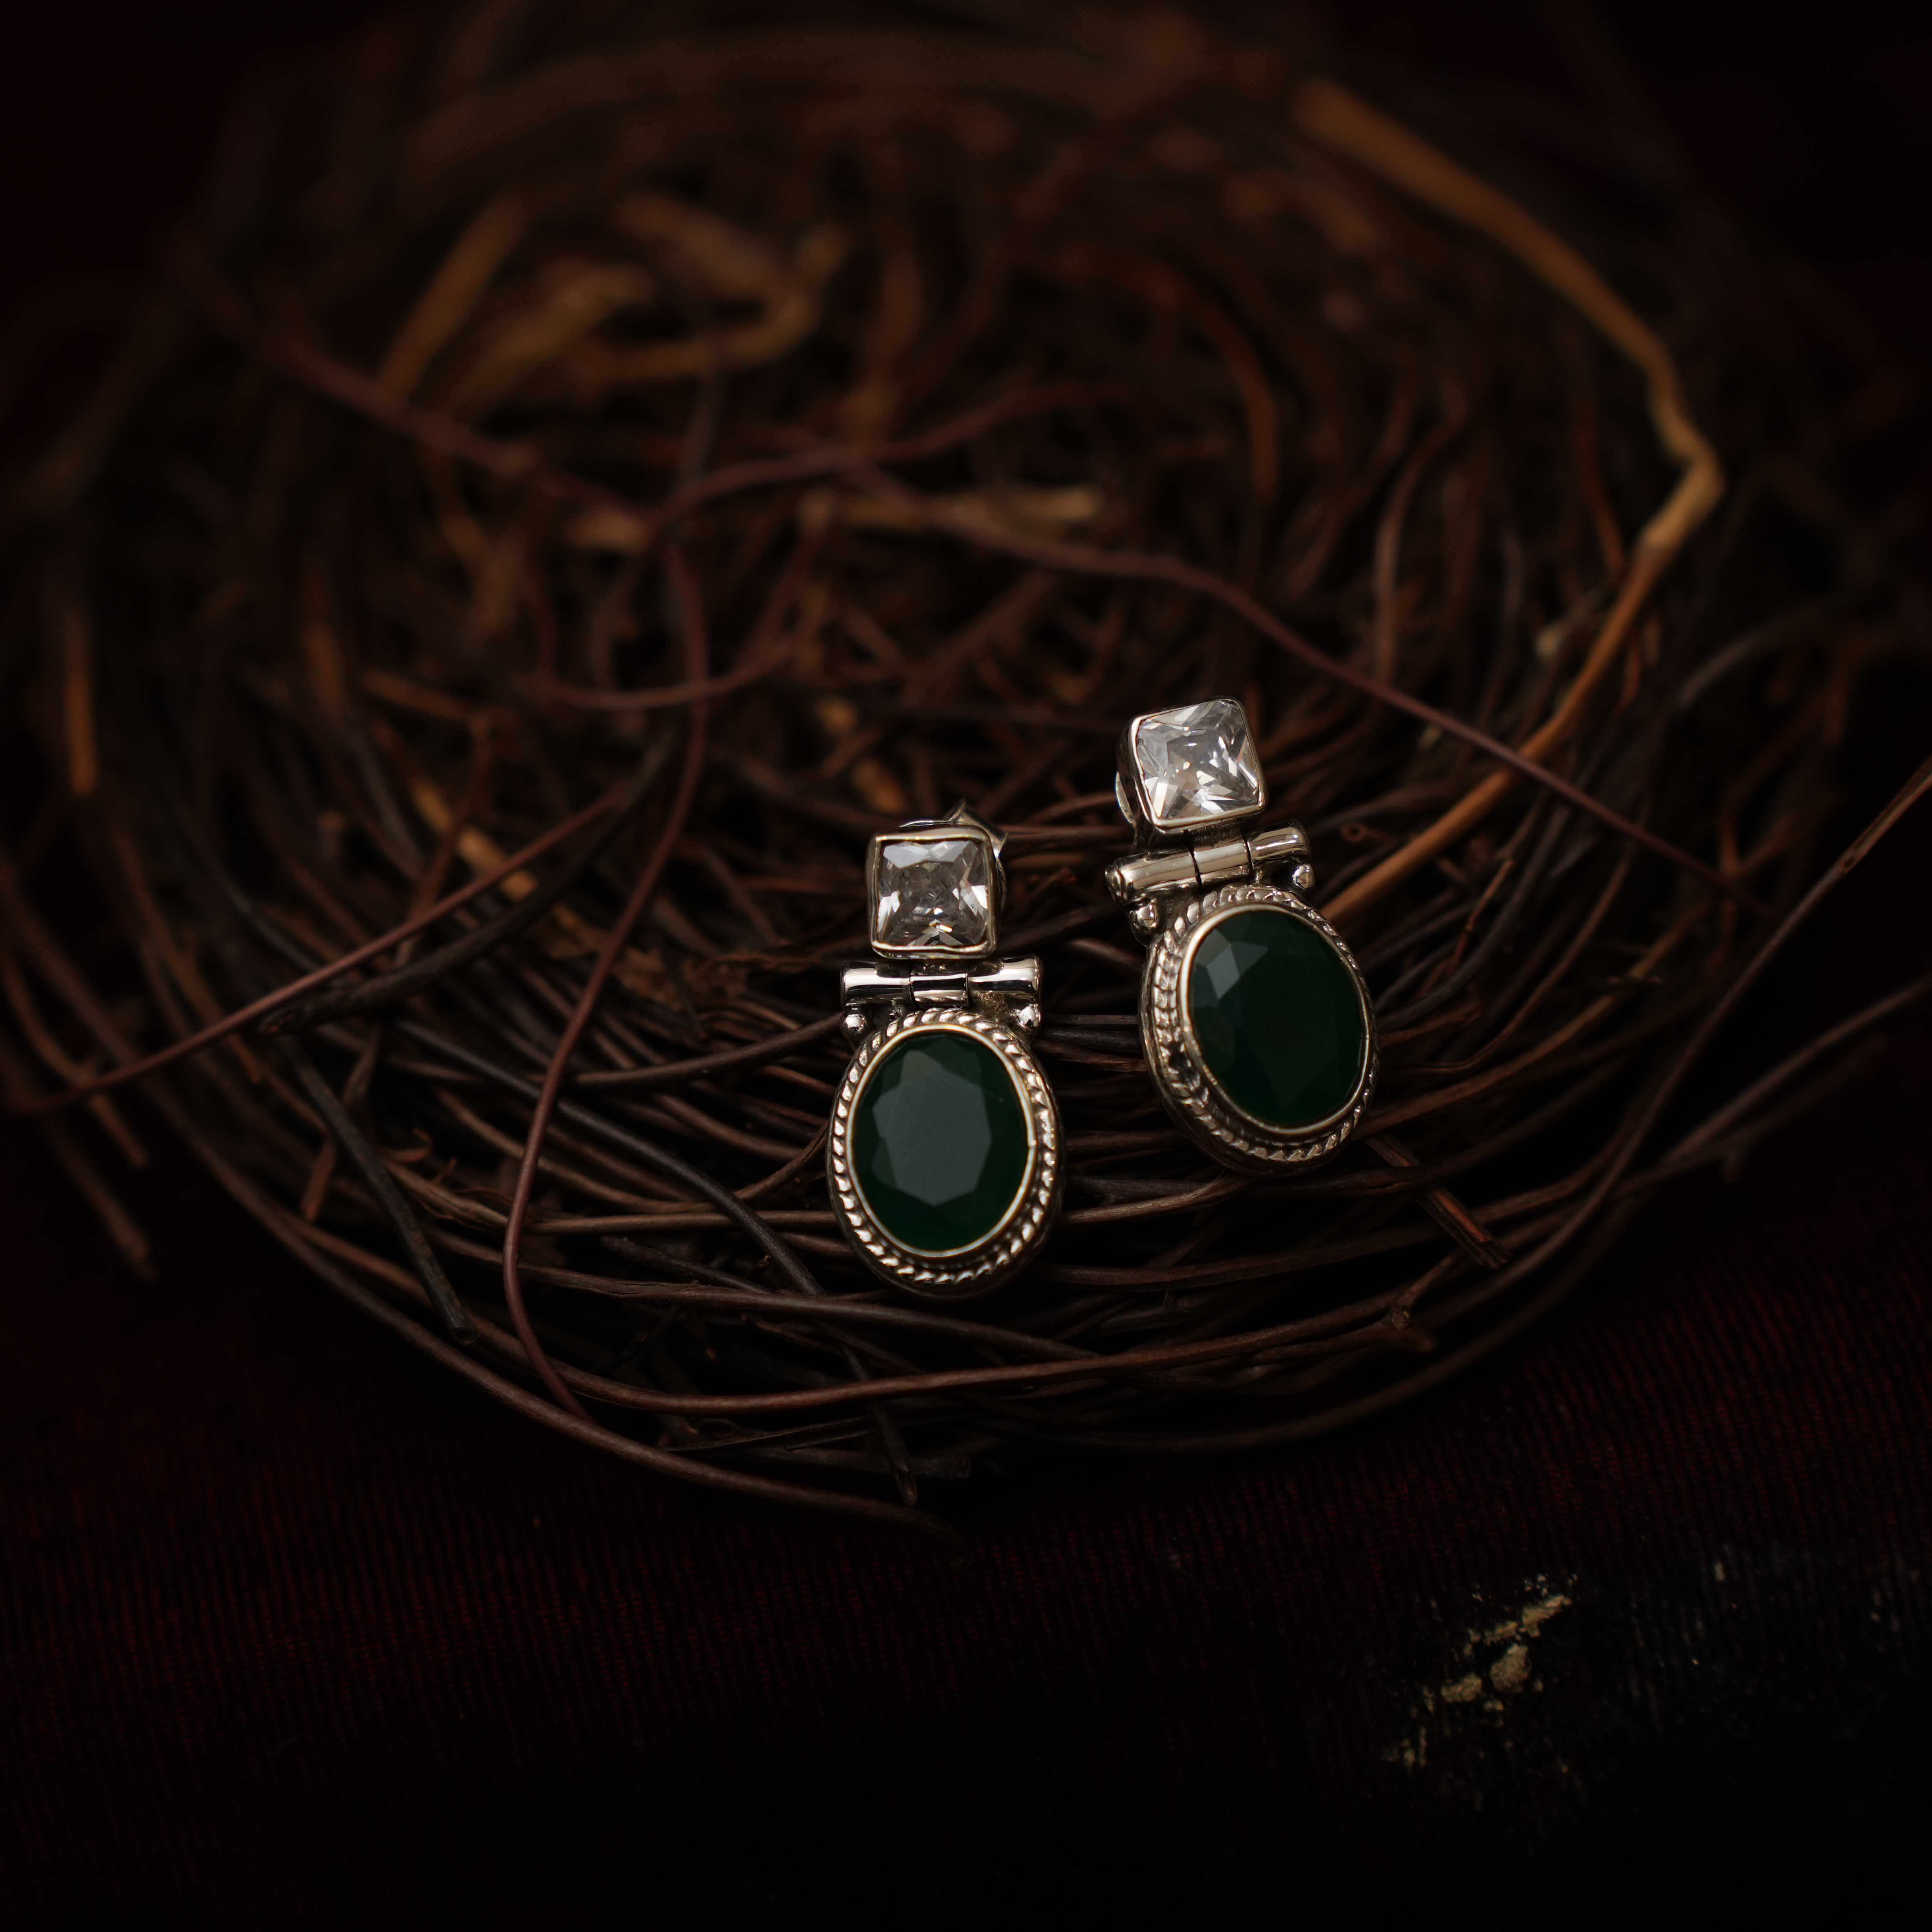 Radhi 925 Oxidized Silver Earrings - Green